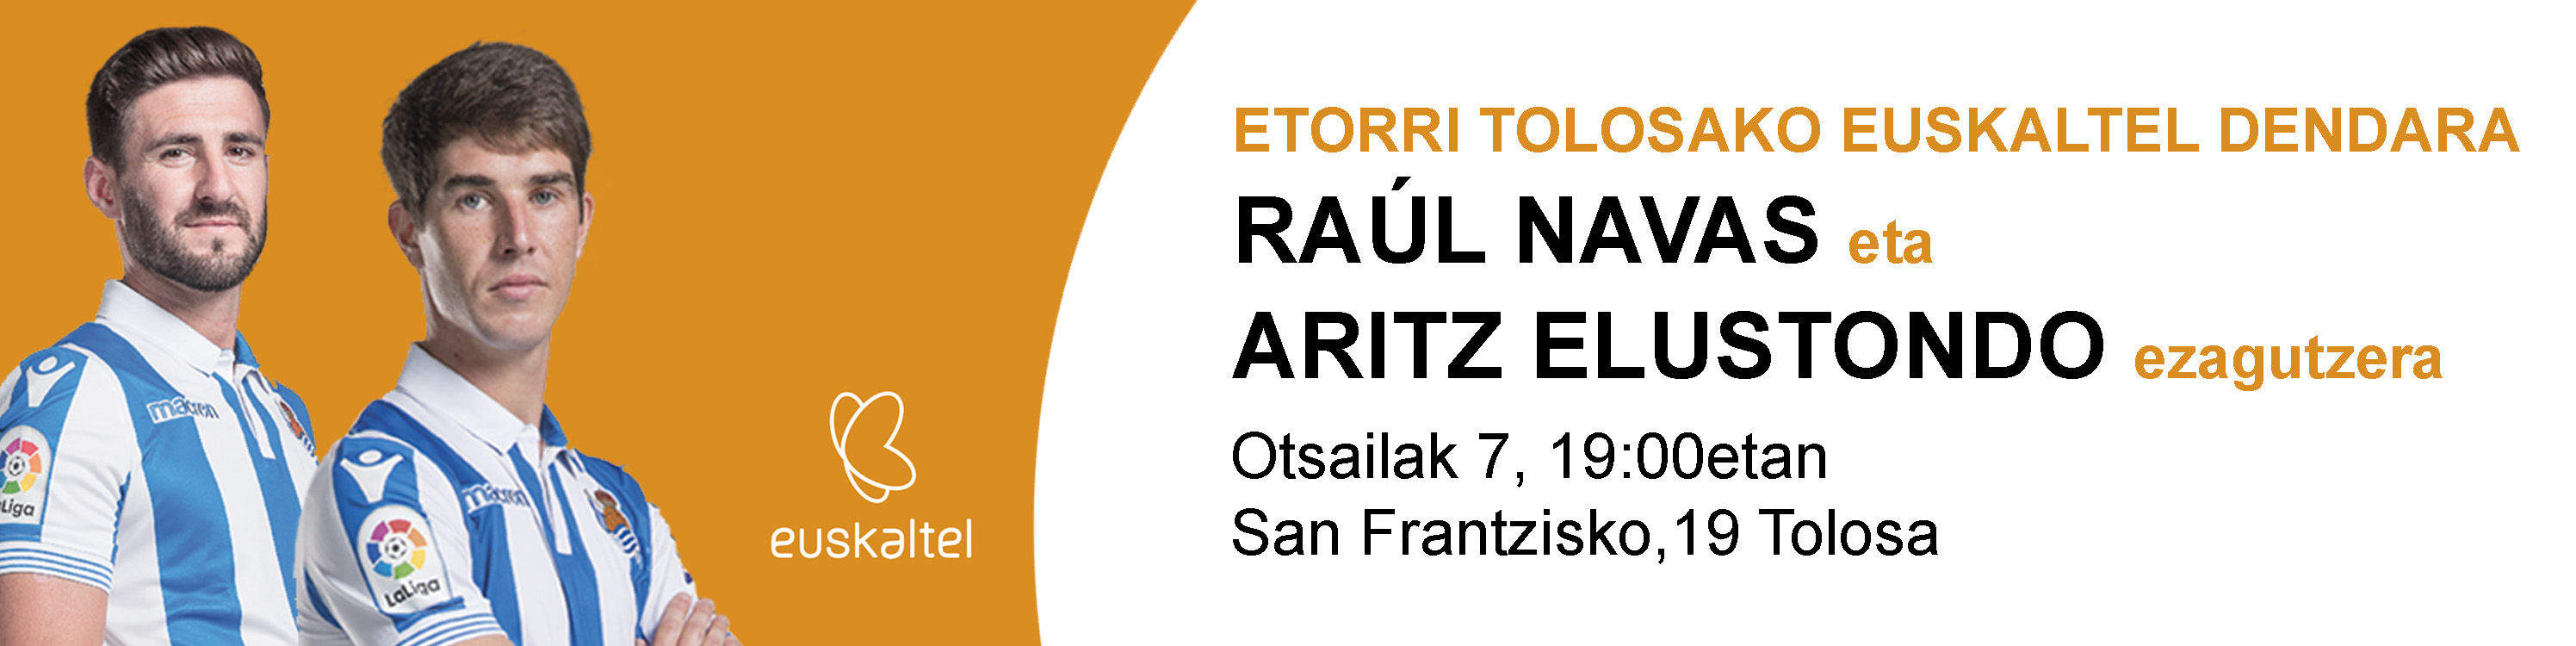 No te pierdas a Aritz Elustondo y Raúl Navas en la tienda Euskaltel de Tolosa el próximo jueves, 7 de febrero